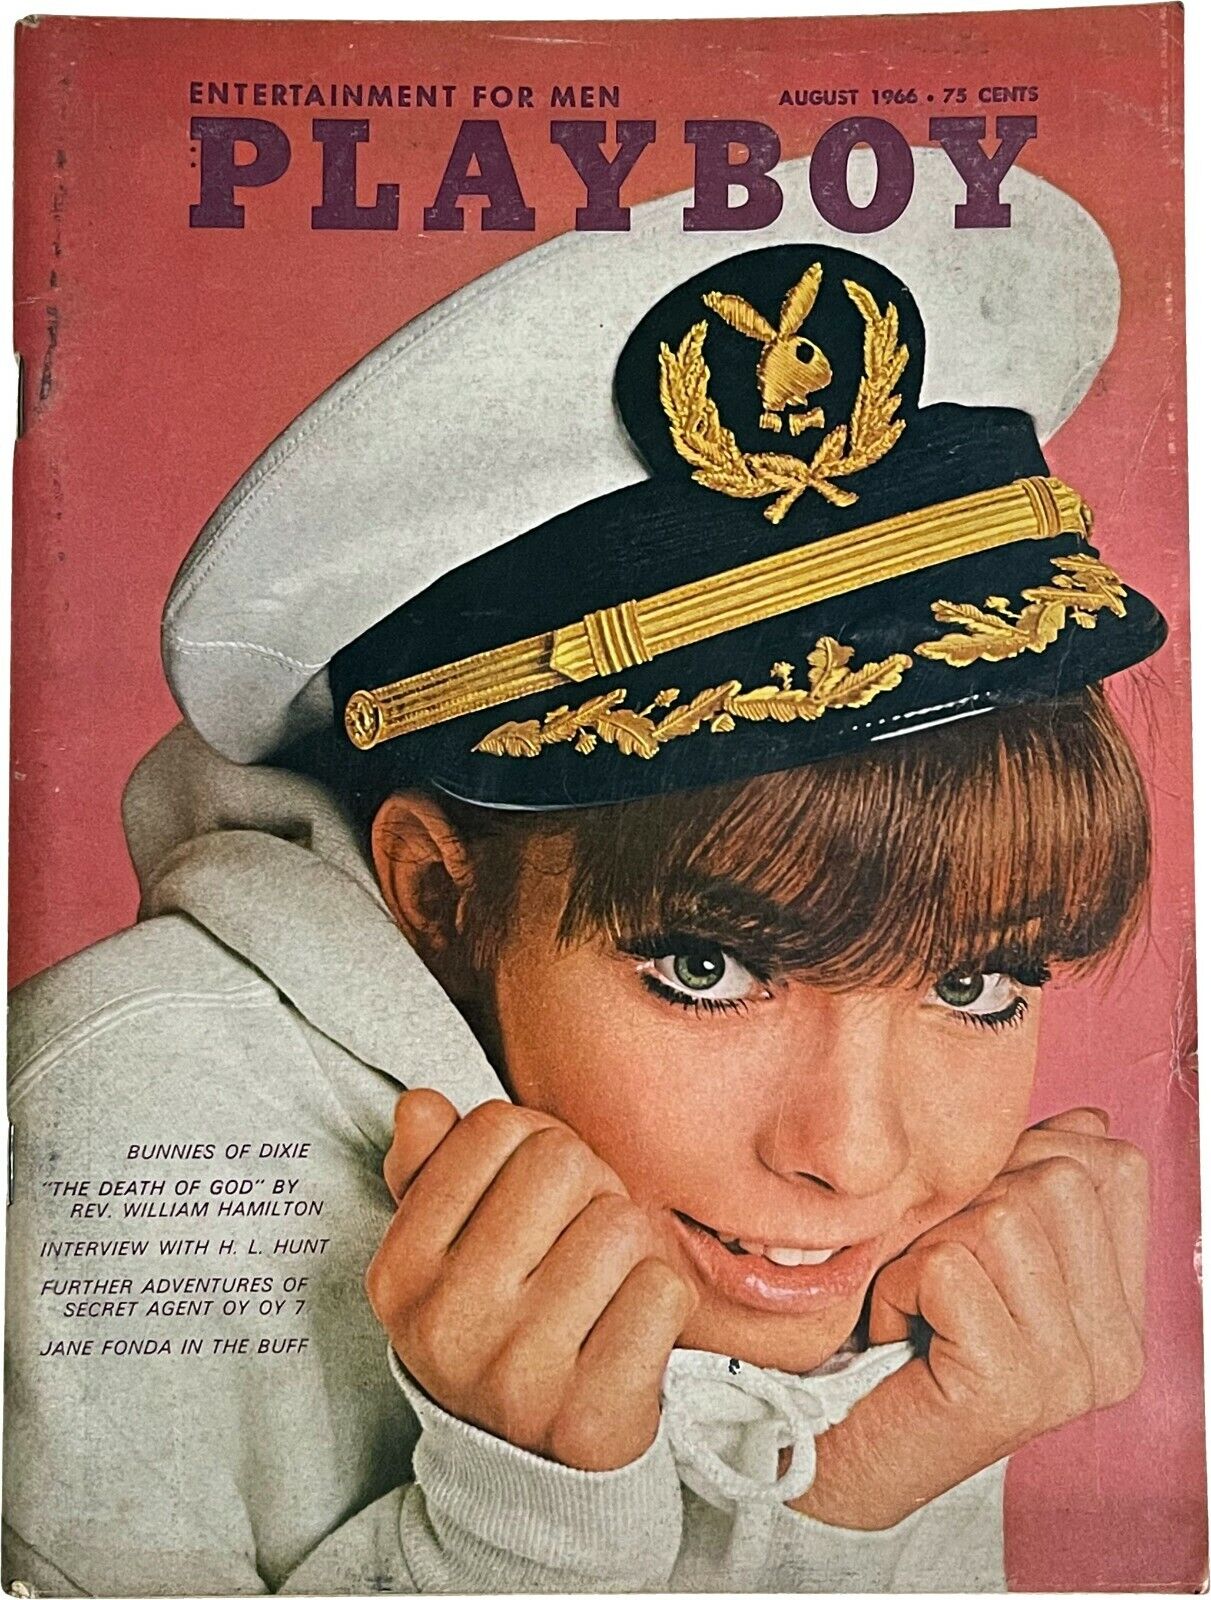 aimi suhaili recommends Jane Fonda Playboy Pictures